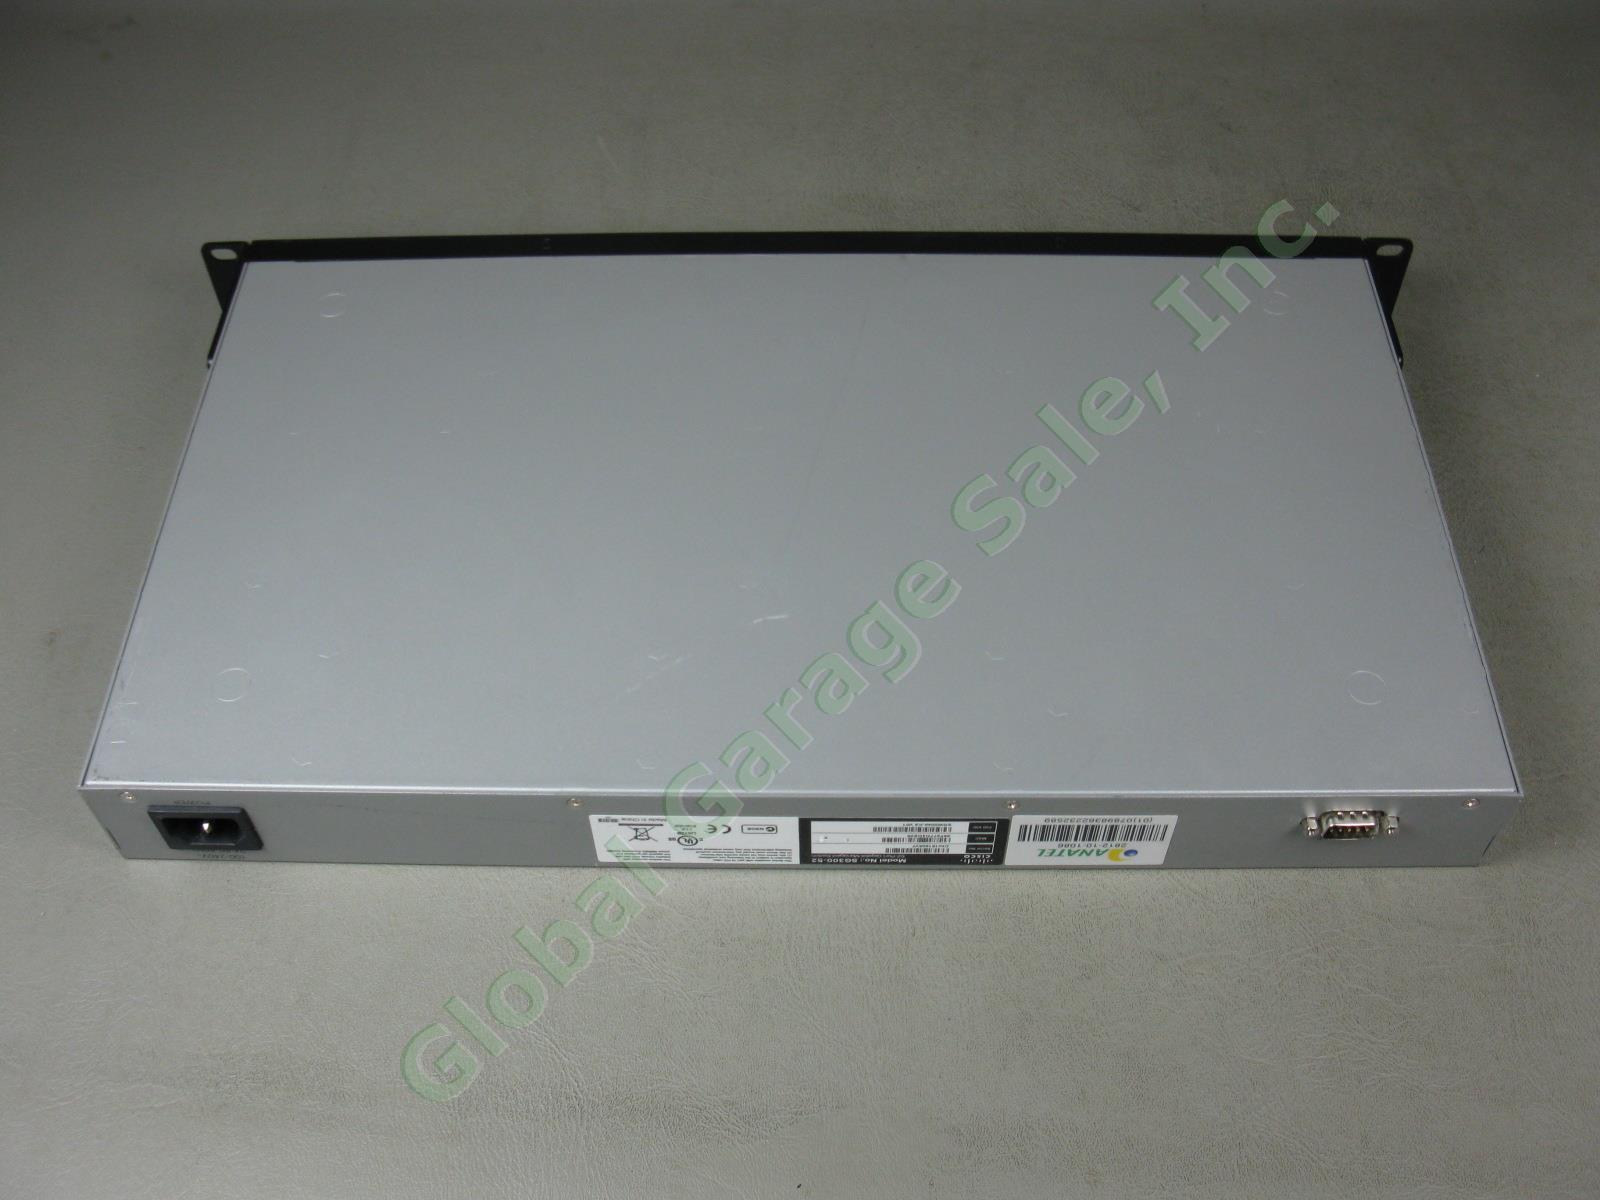 Cisco Small Business SG300-52 Port Gigabit Managed Ethernet Switch SRW2048-K9VO1 7